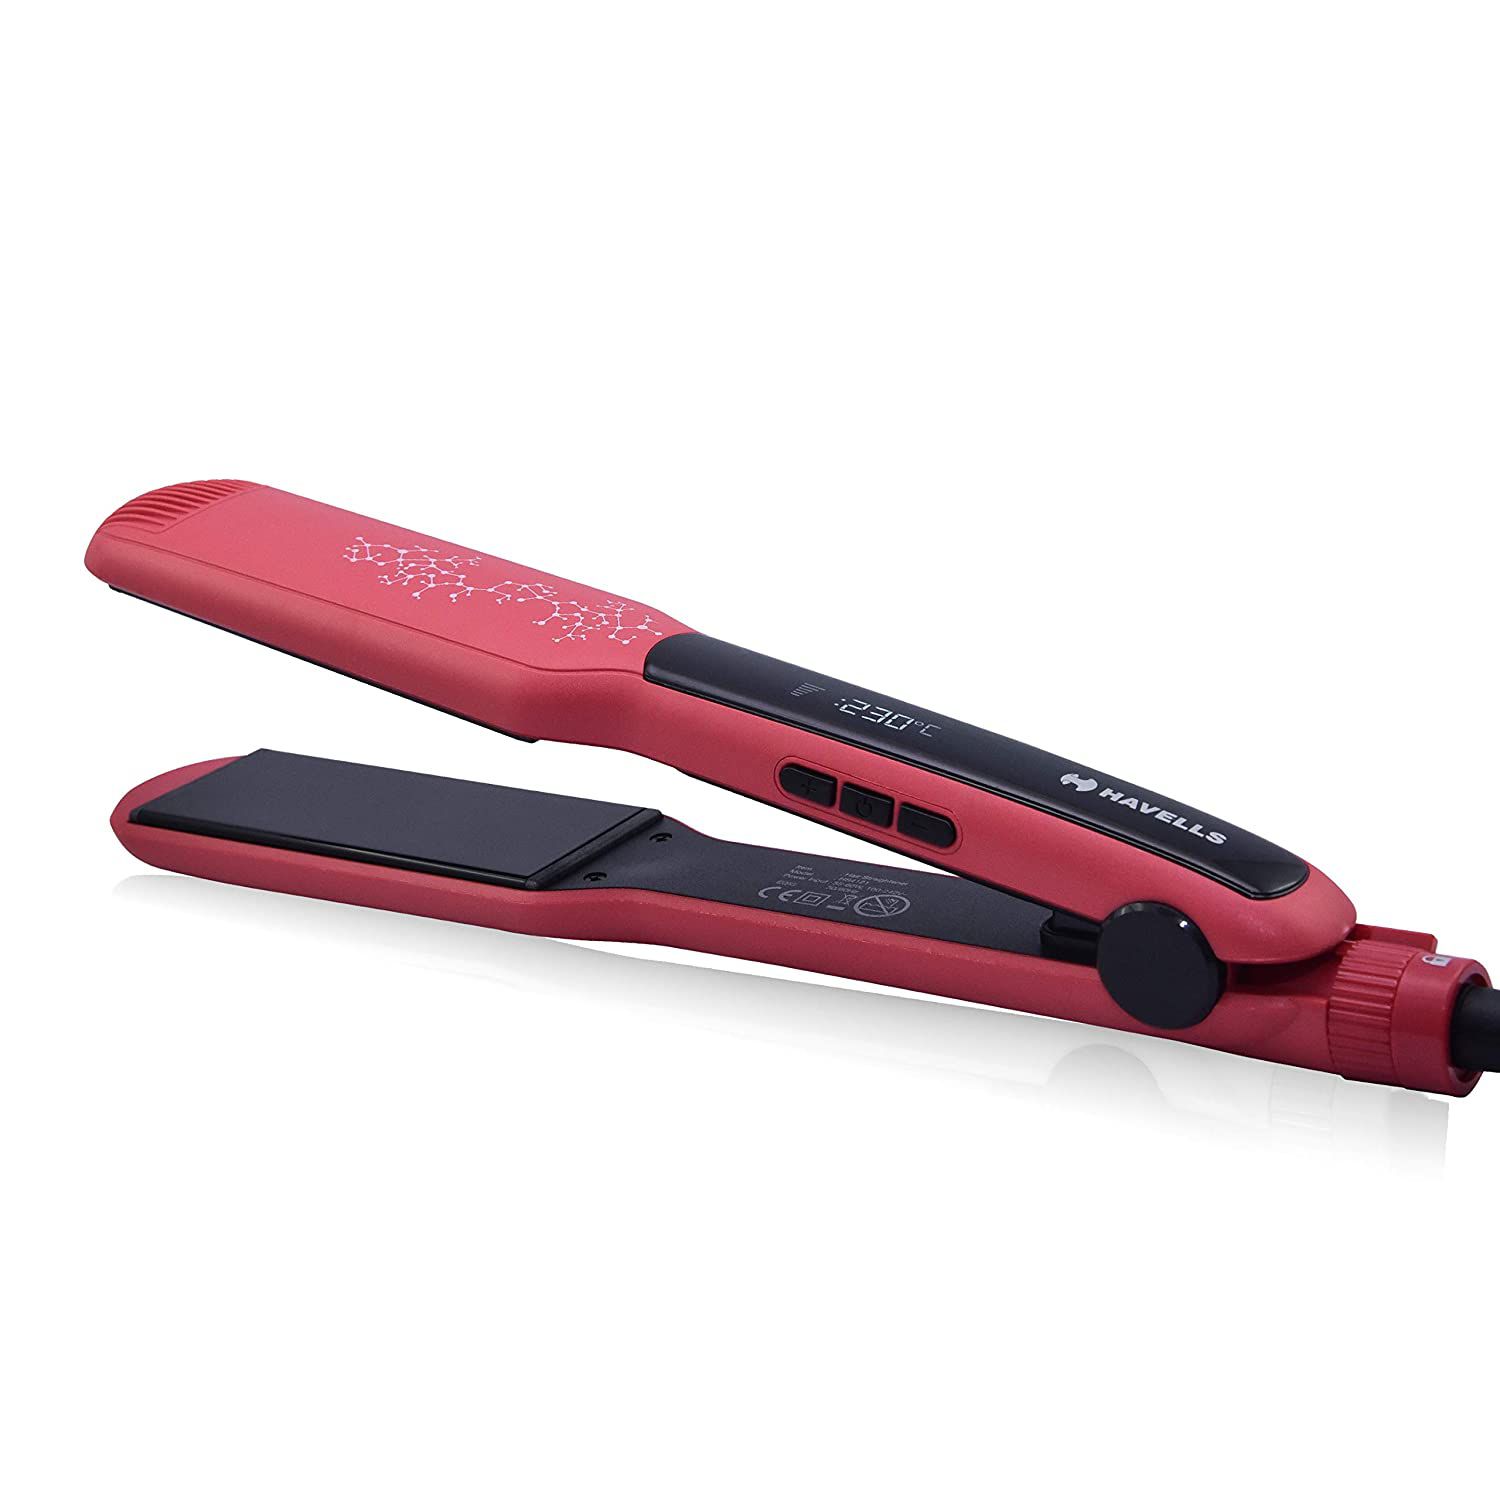 Havells HS4121 Wide Plate hair straightener With Digital Display & Adjustable temperature,...